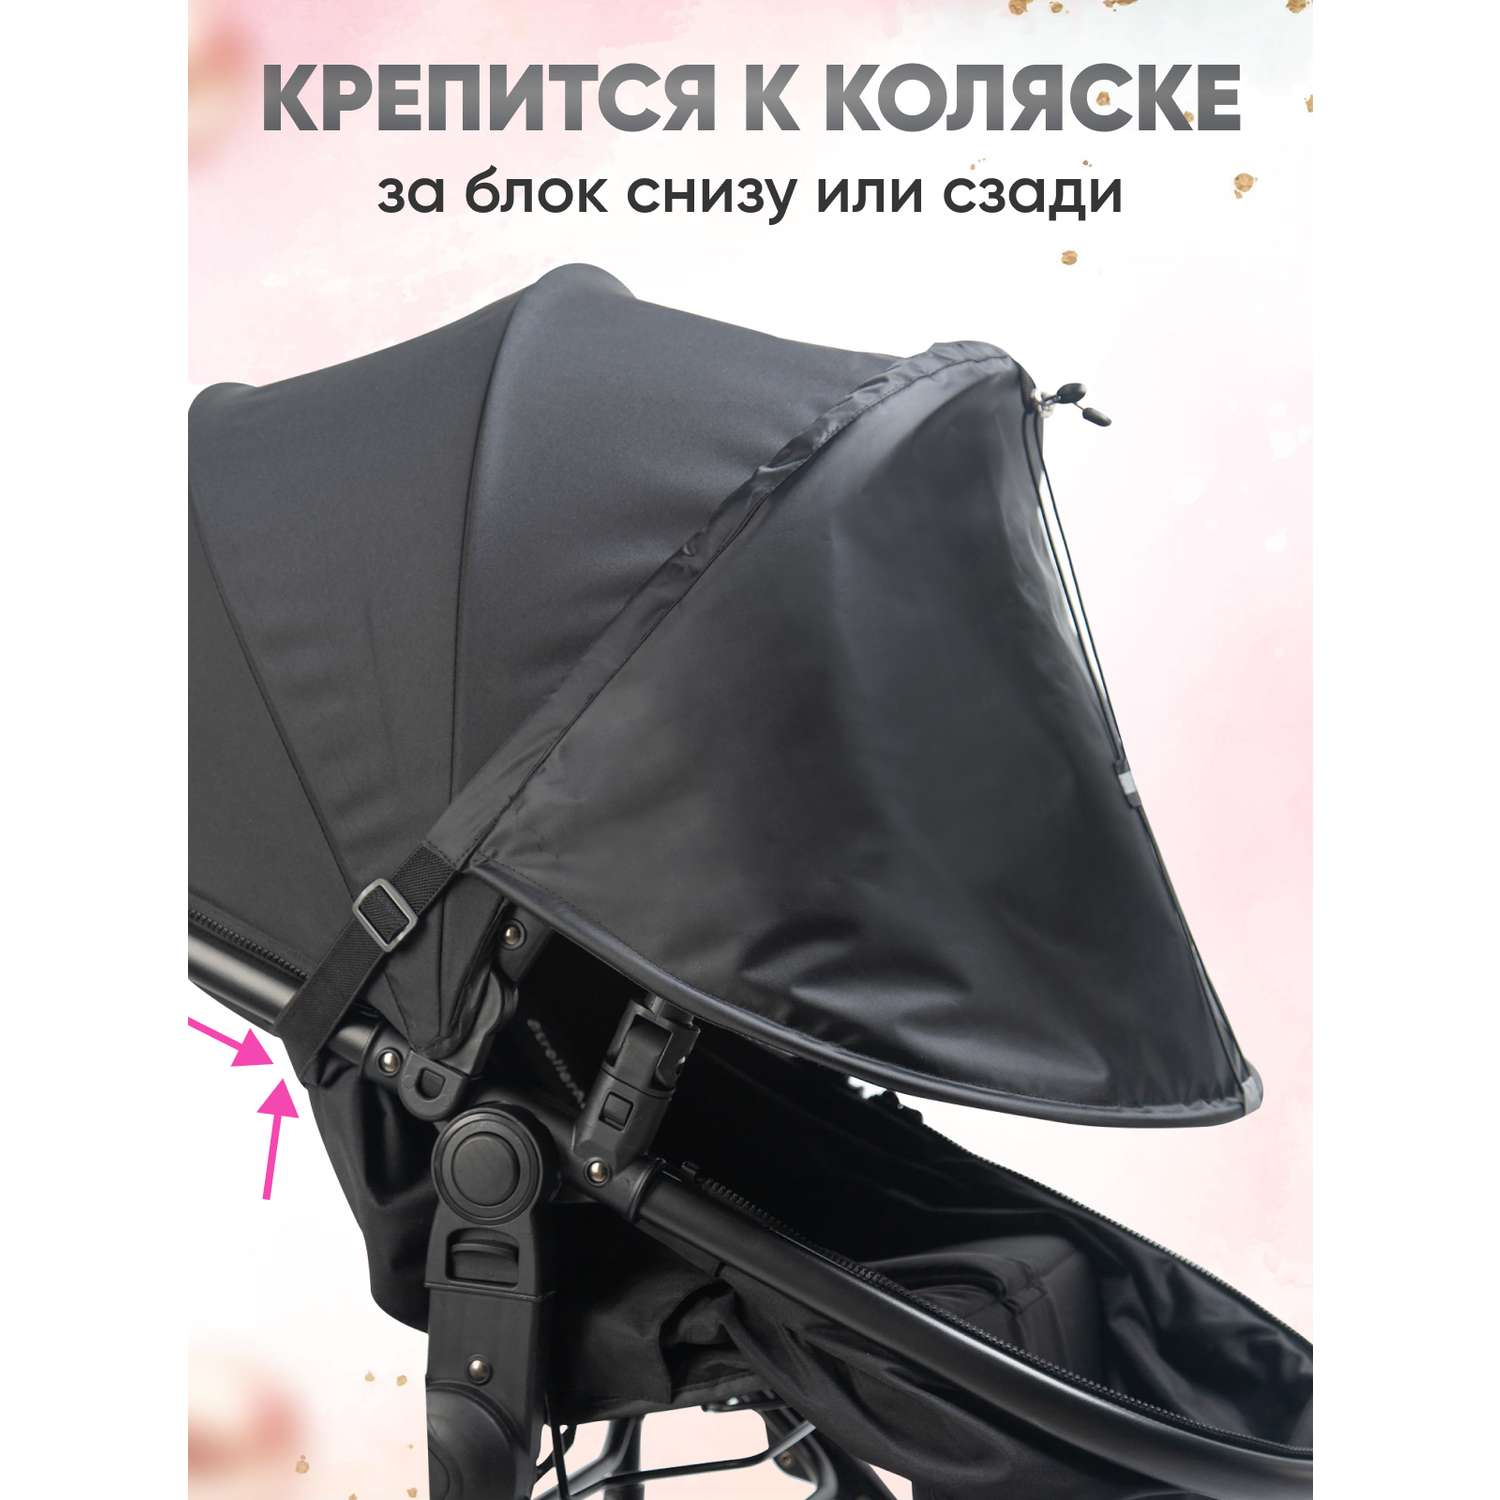 Ширина сидения (прог. блок) 29 см - Детские коляски в городе Курск